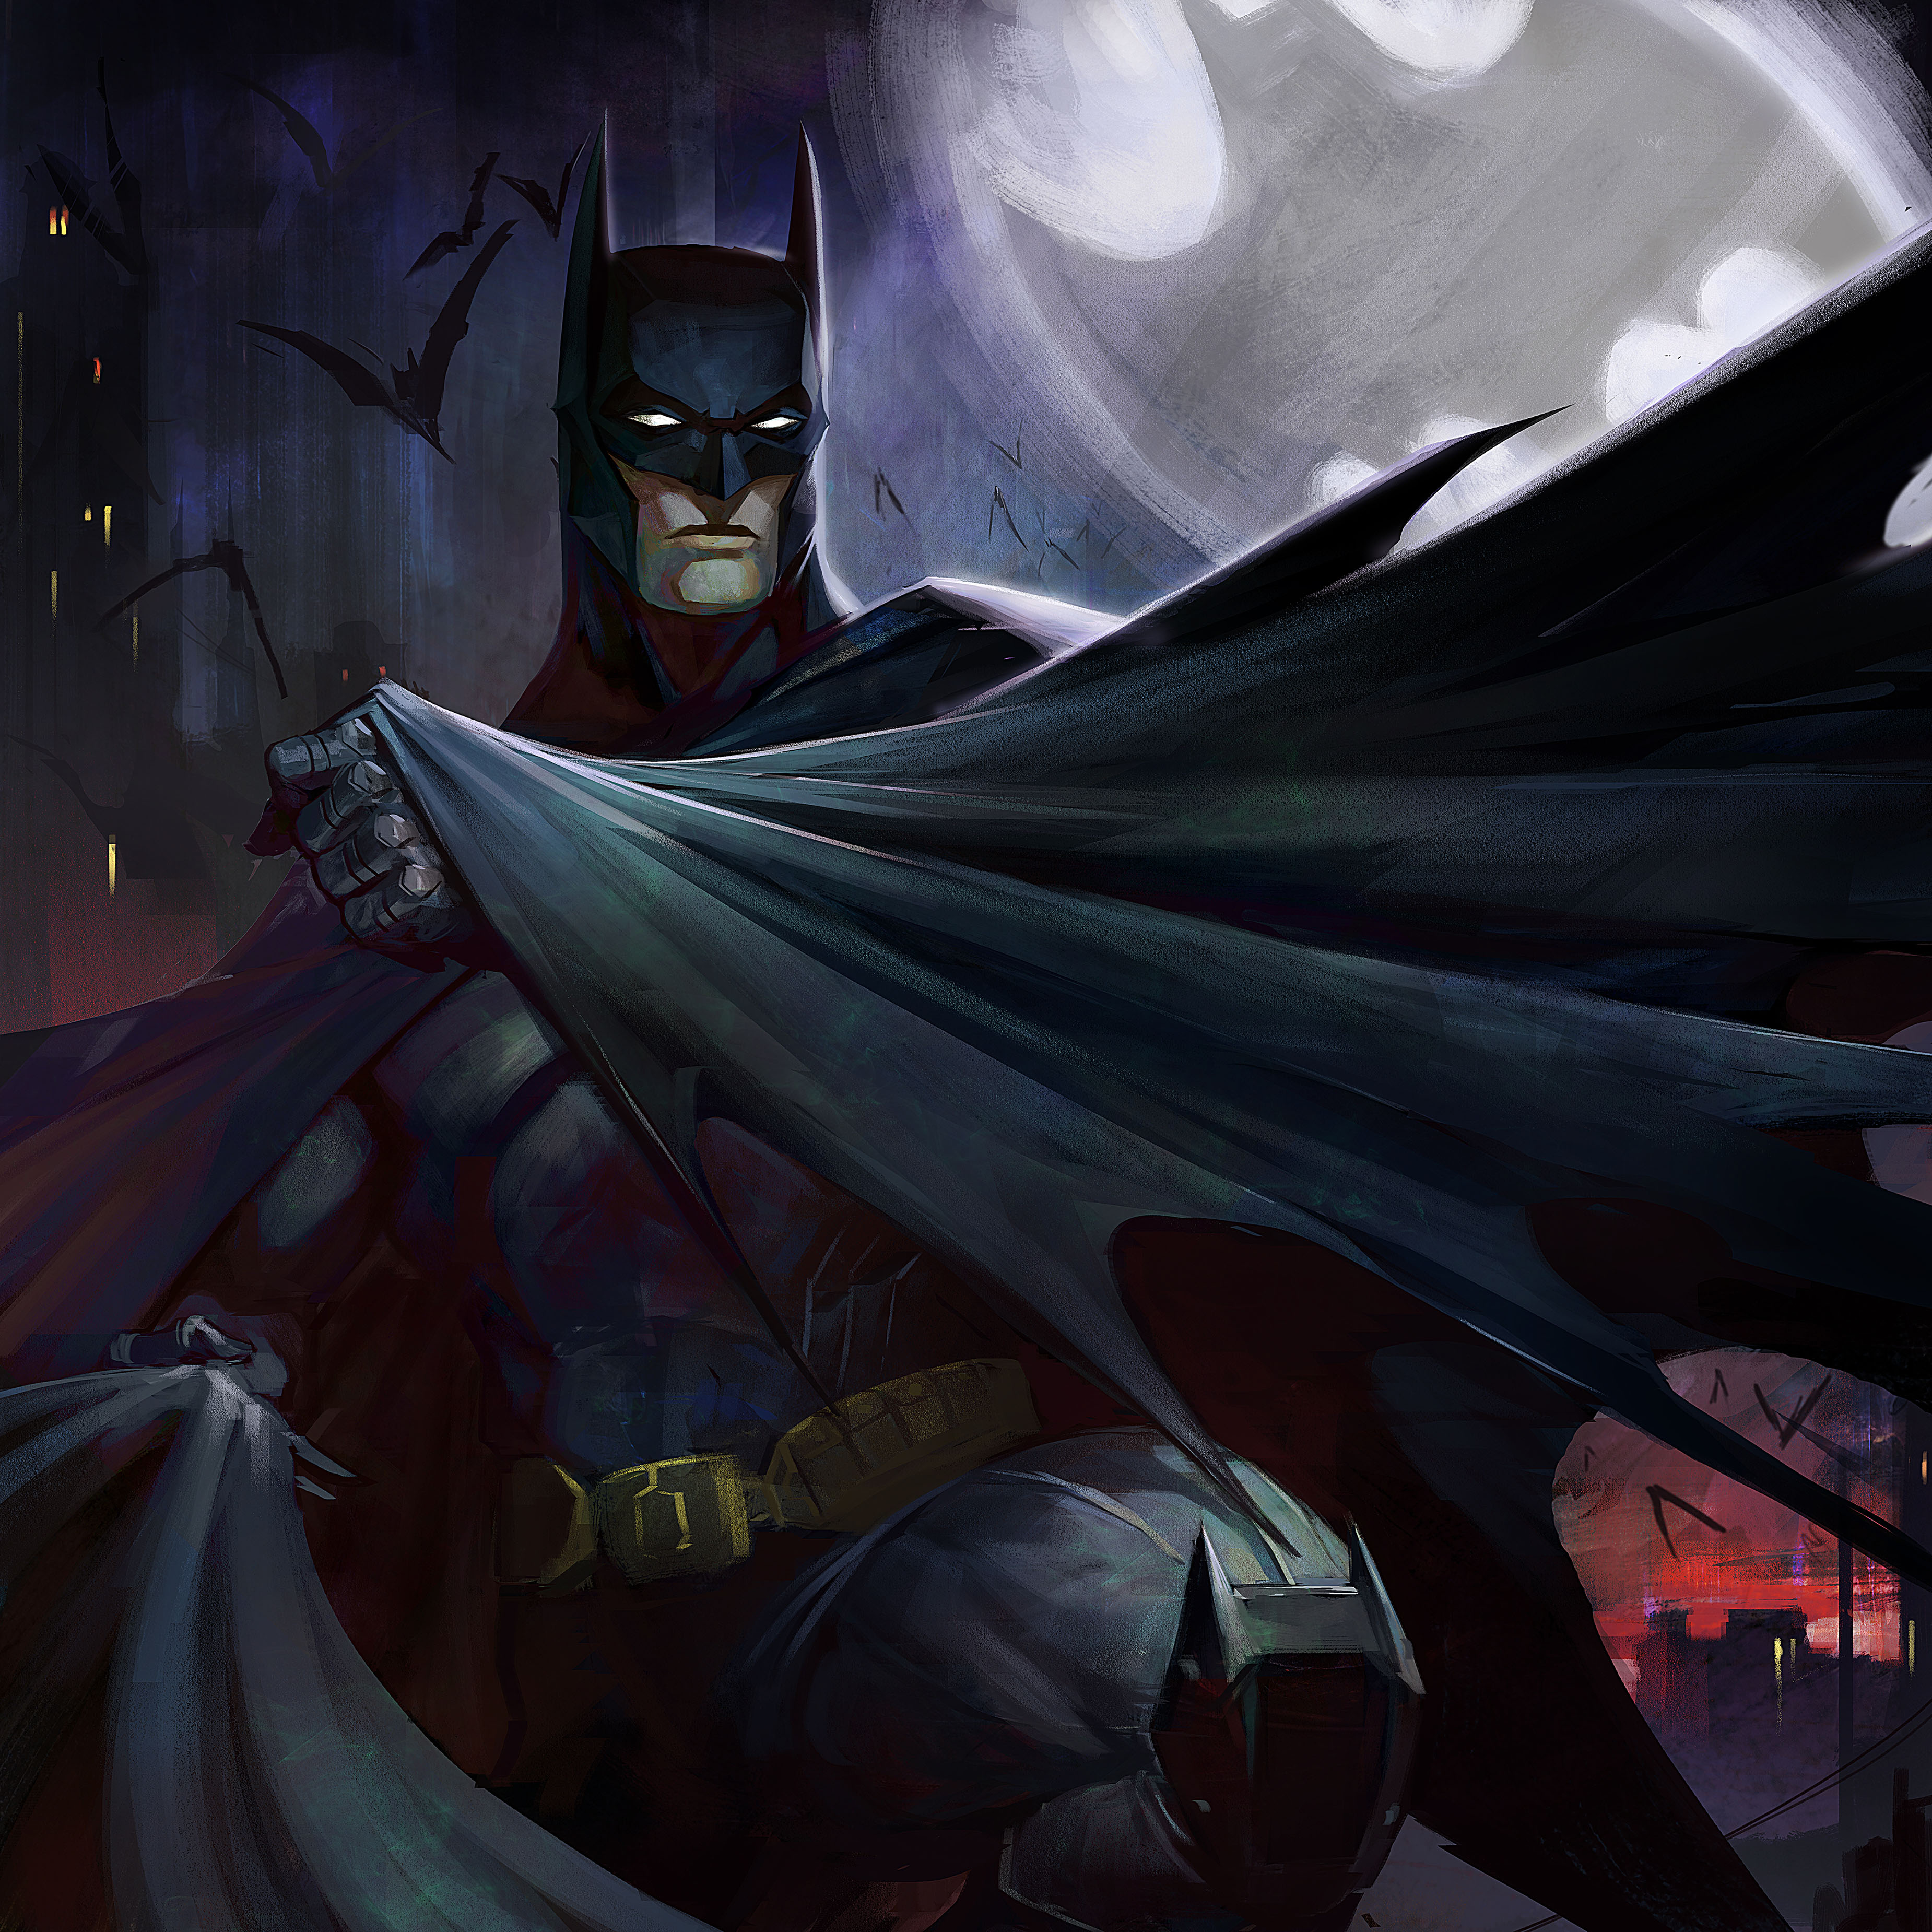 R batman. Infinite crisis Бэтмен. Карточки Бэтмен защитник Готэма. Batman Art. Красивый Бэтмен.